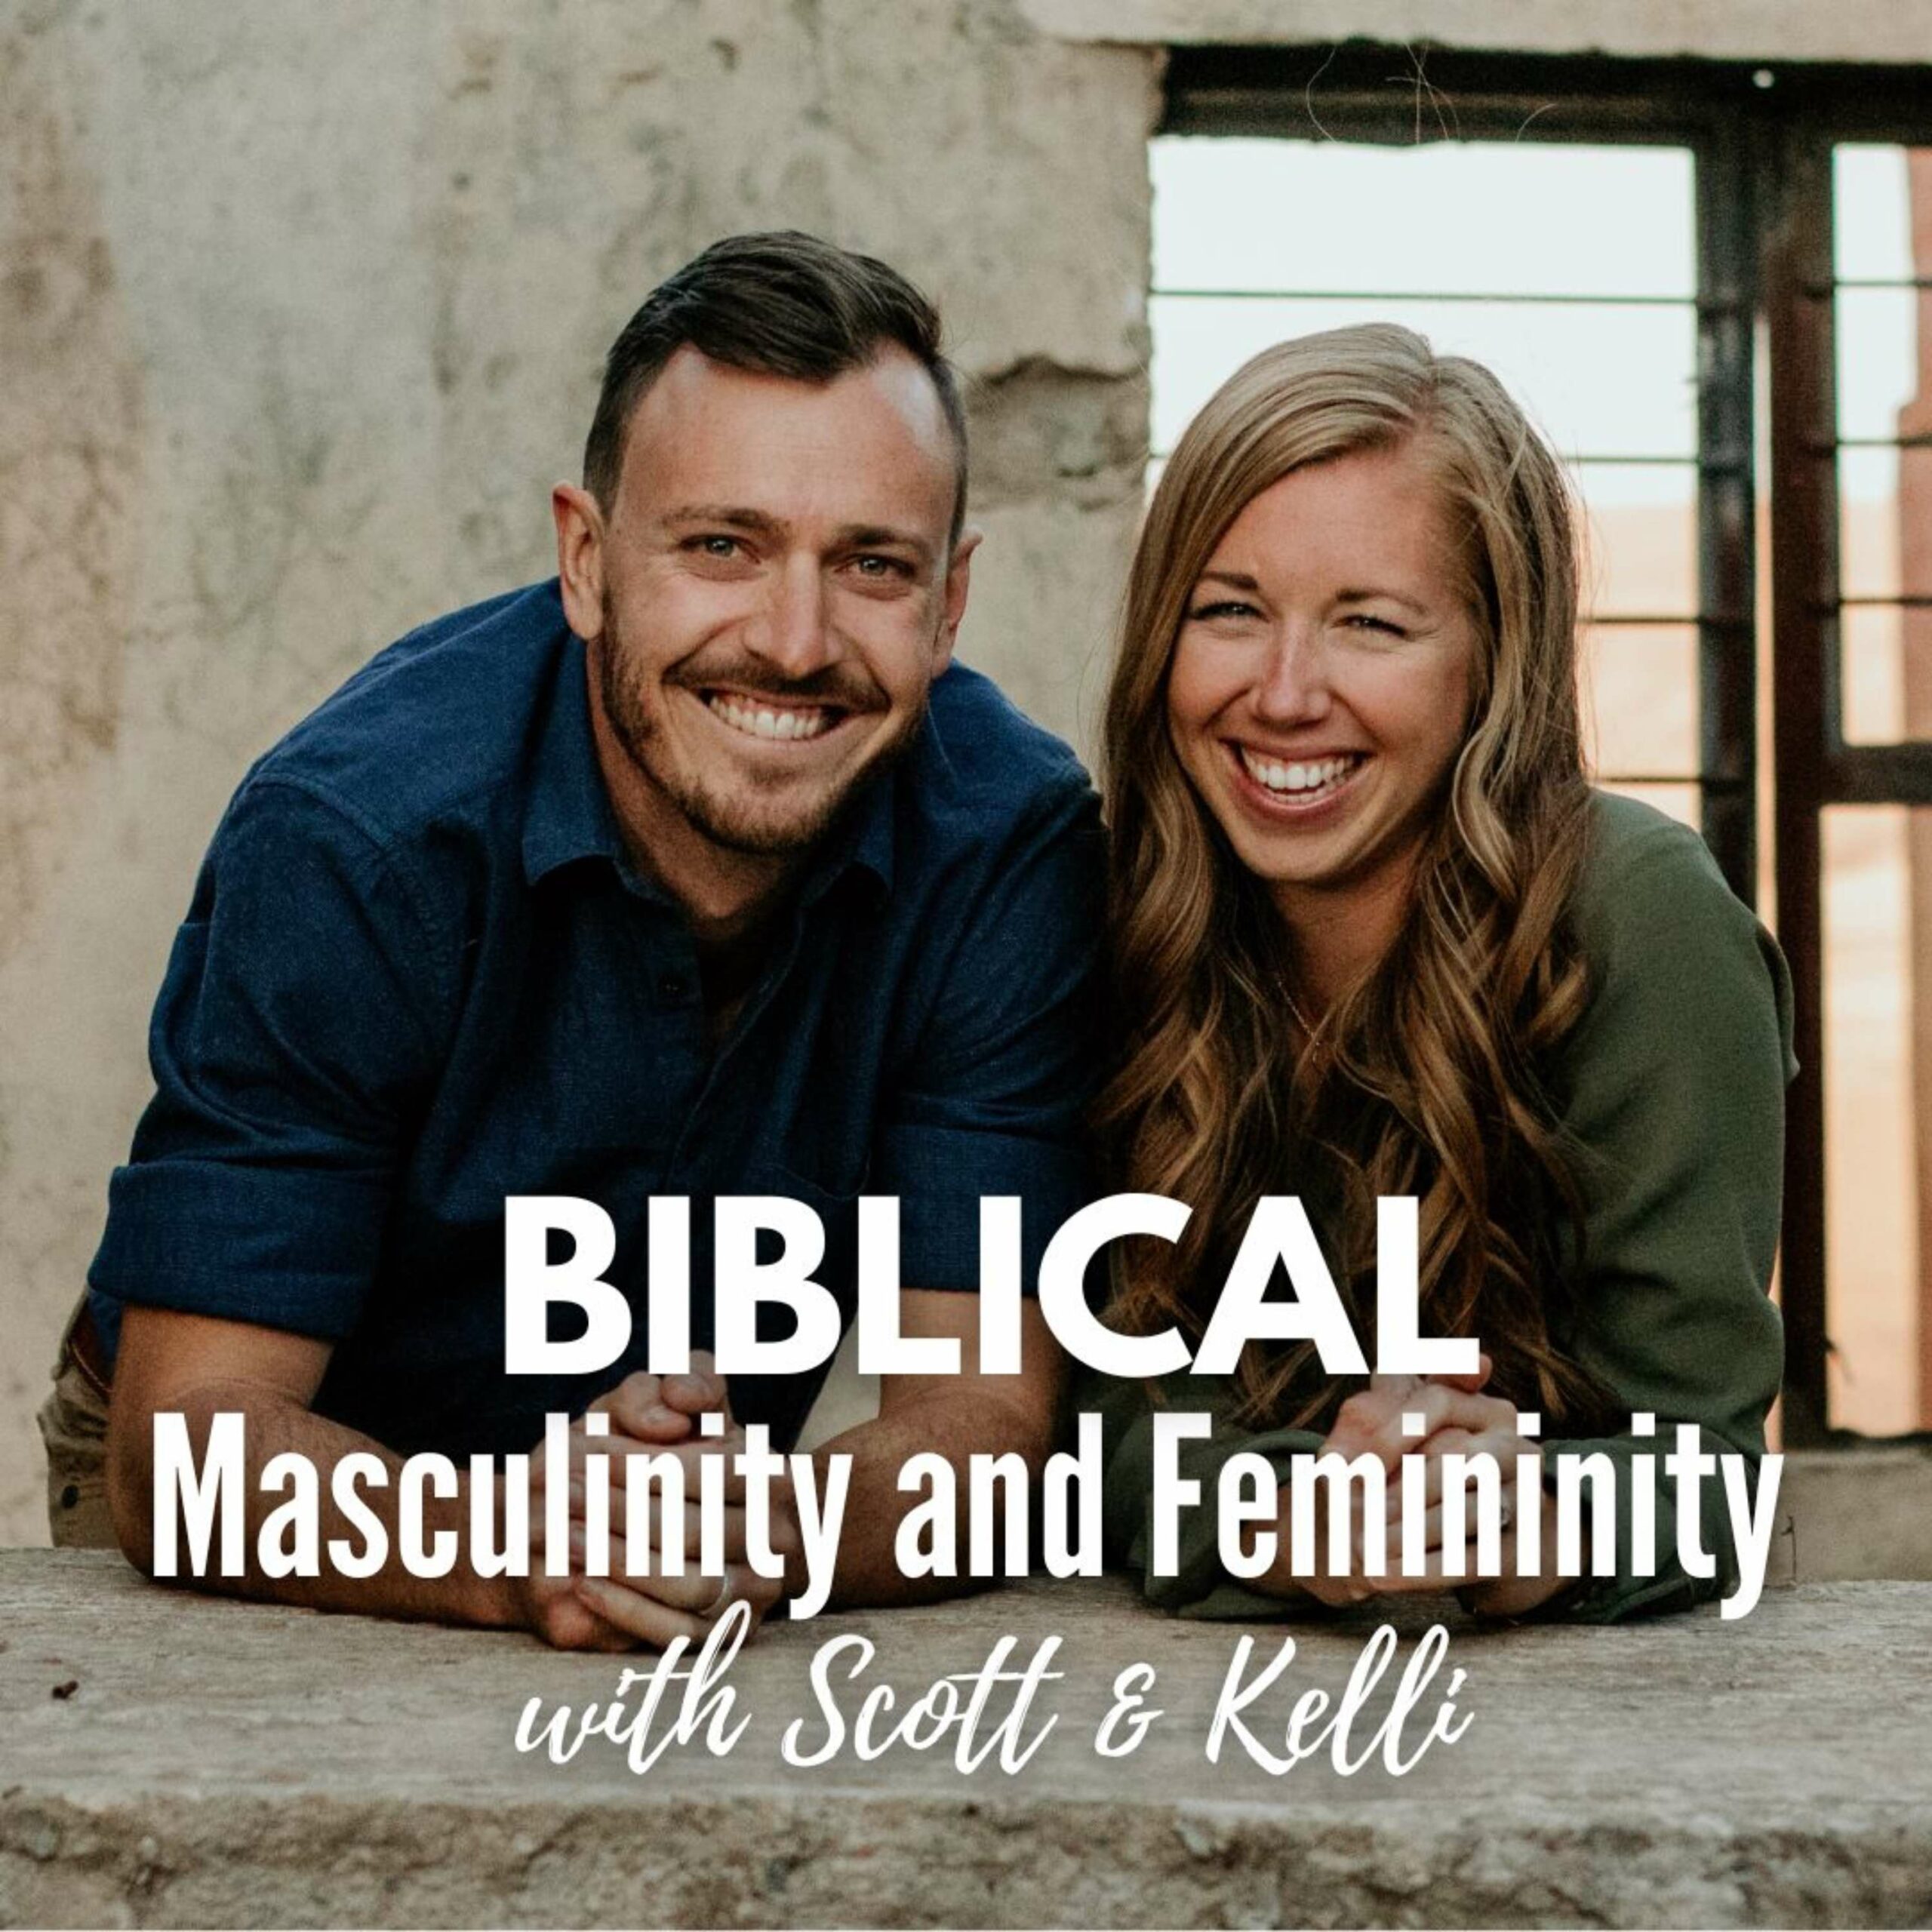 Masculinity & Femininity in Christian Marriage. Androgyny in the Church.